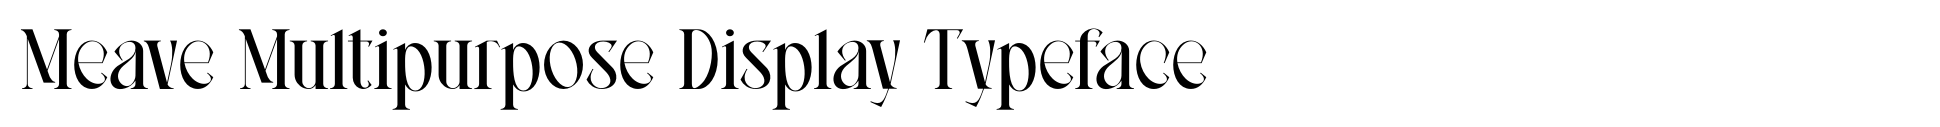 Meave Multipurpose Display Typeface